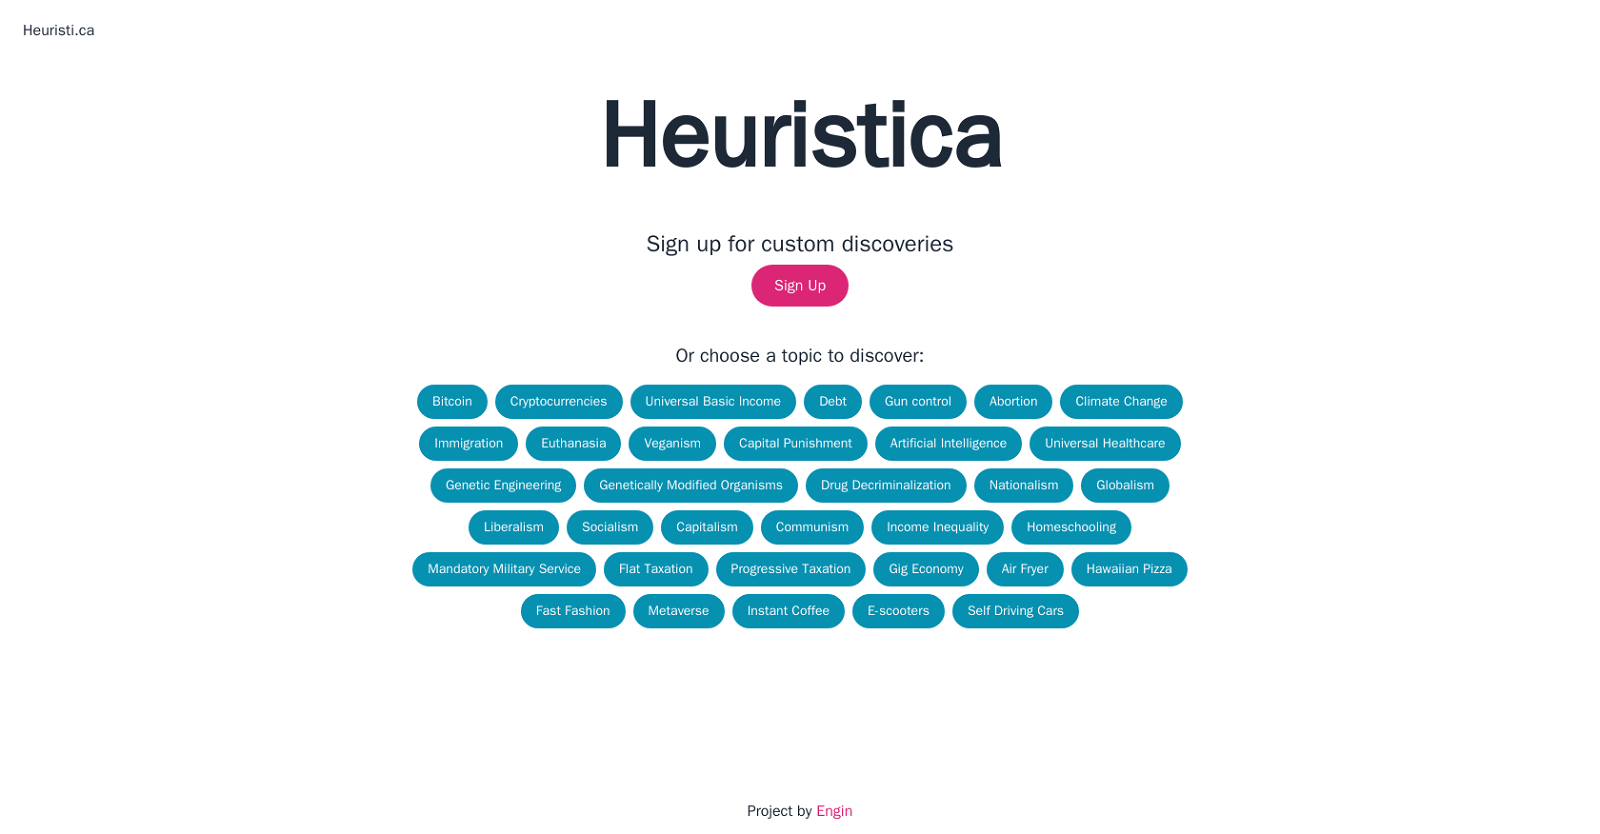 Heuristica